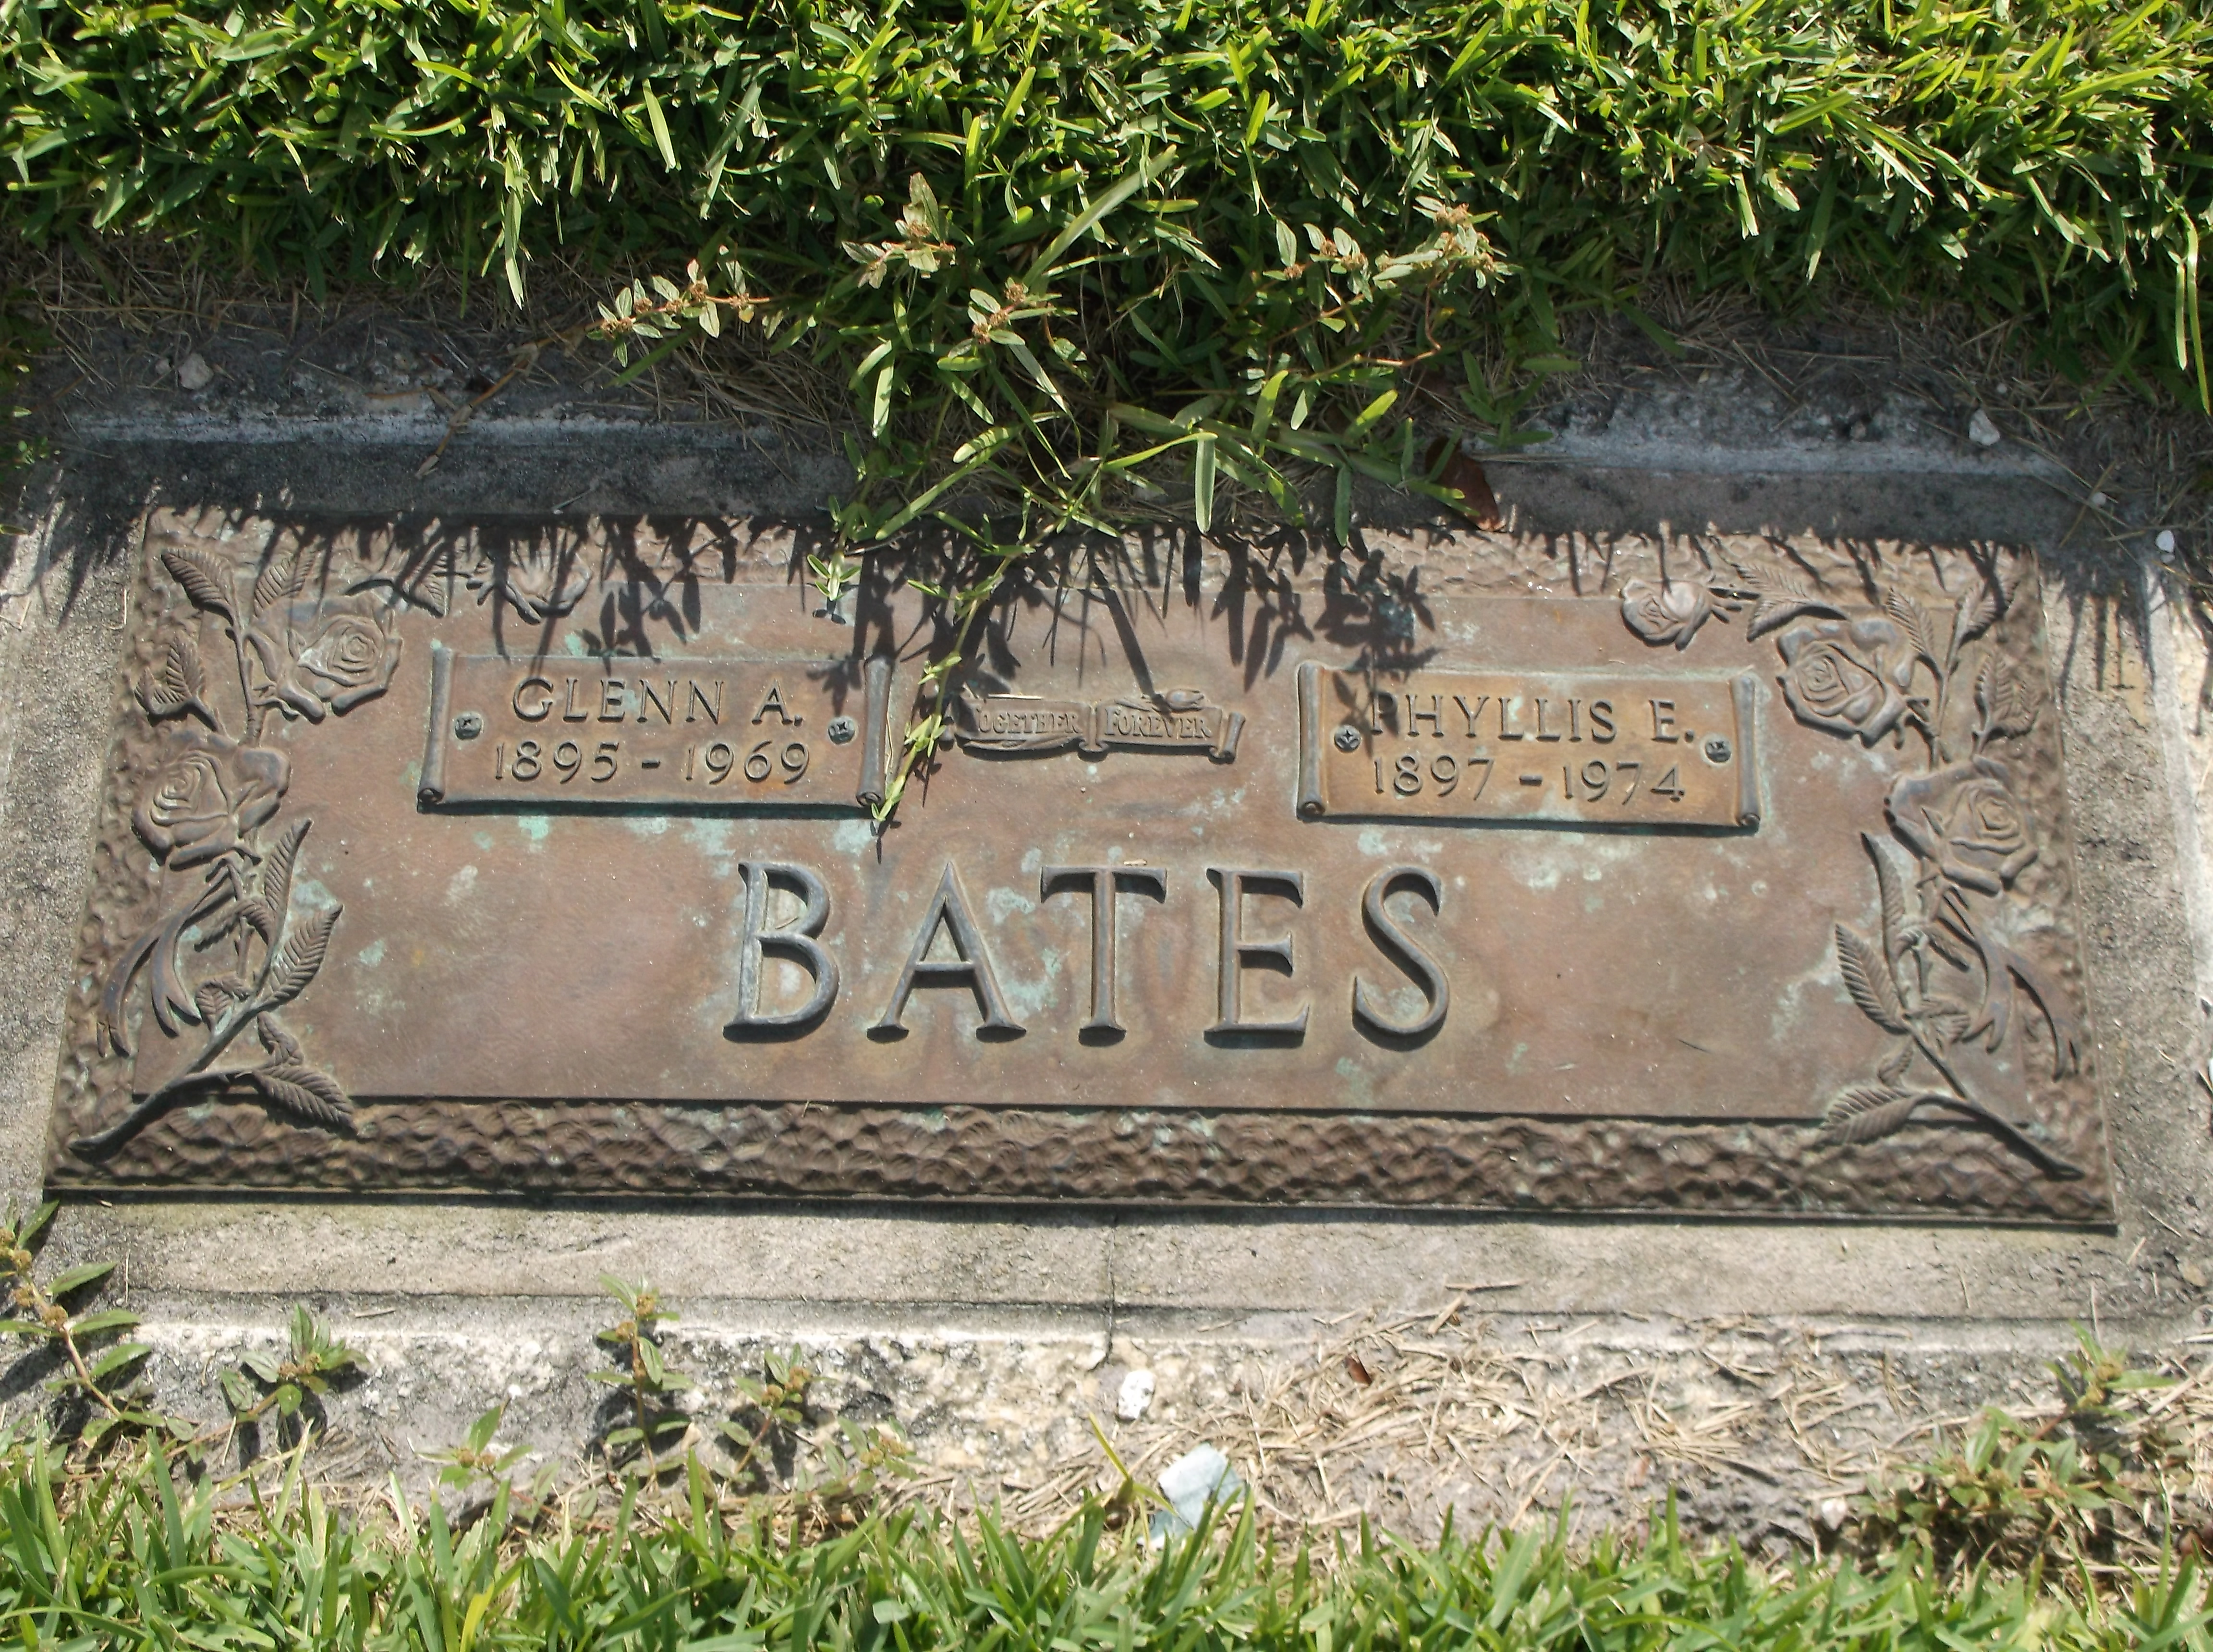 Phyllis E Bates